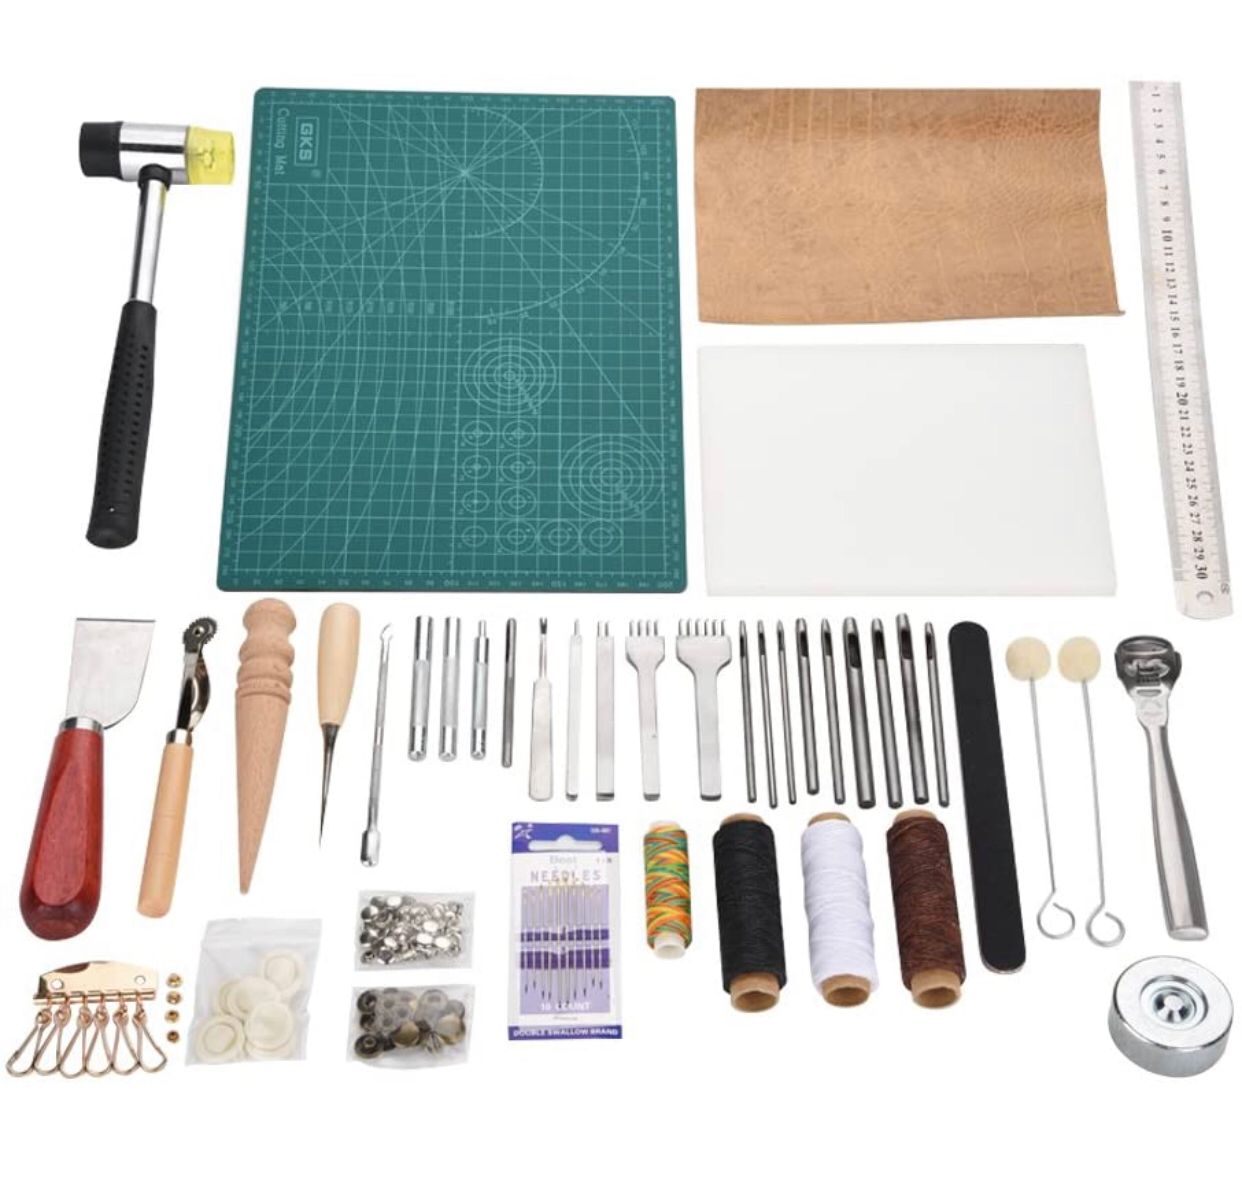  28 Pcs Leathercraft Hand Tools Kit, Upholstery Repair